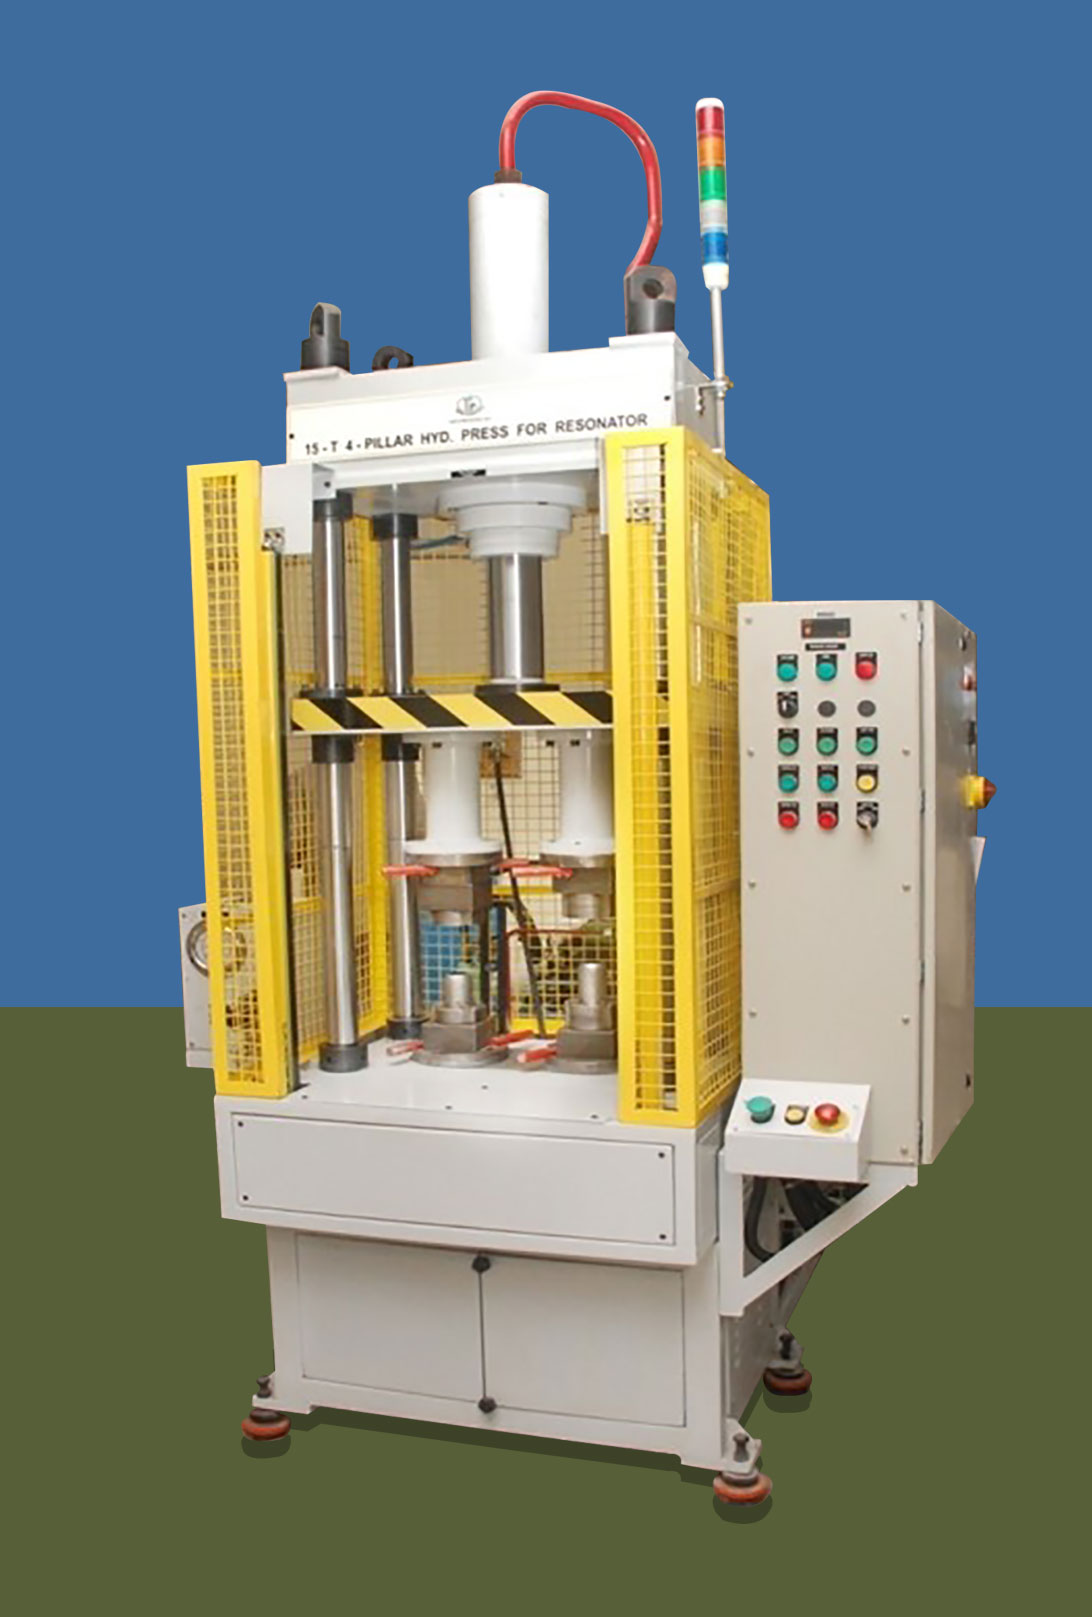 15-T 4-Pillar Hydraulic Press For Resonator